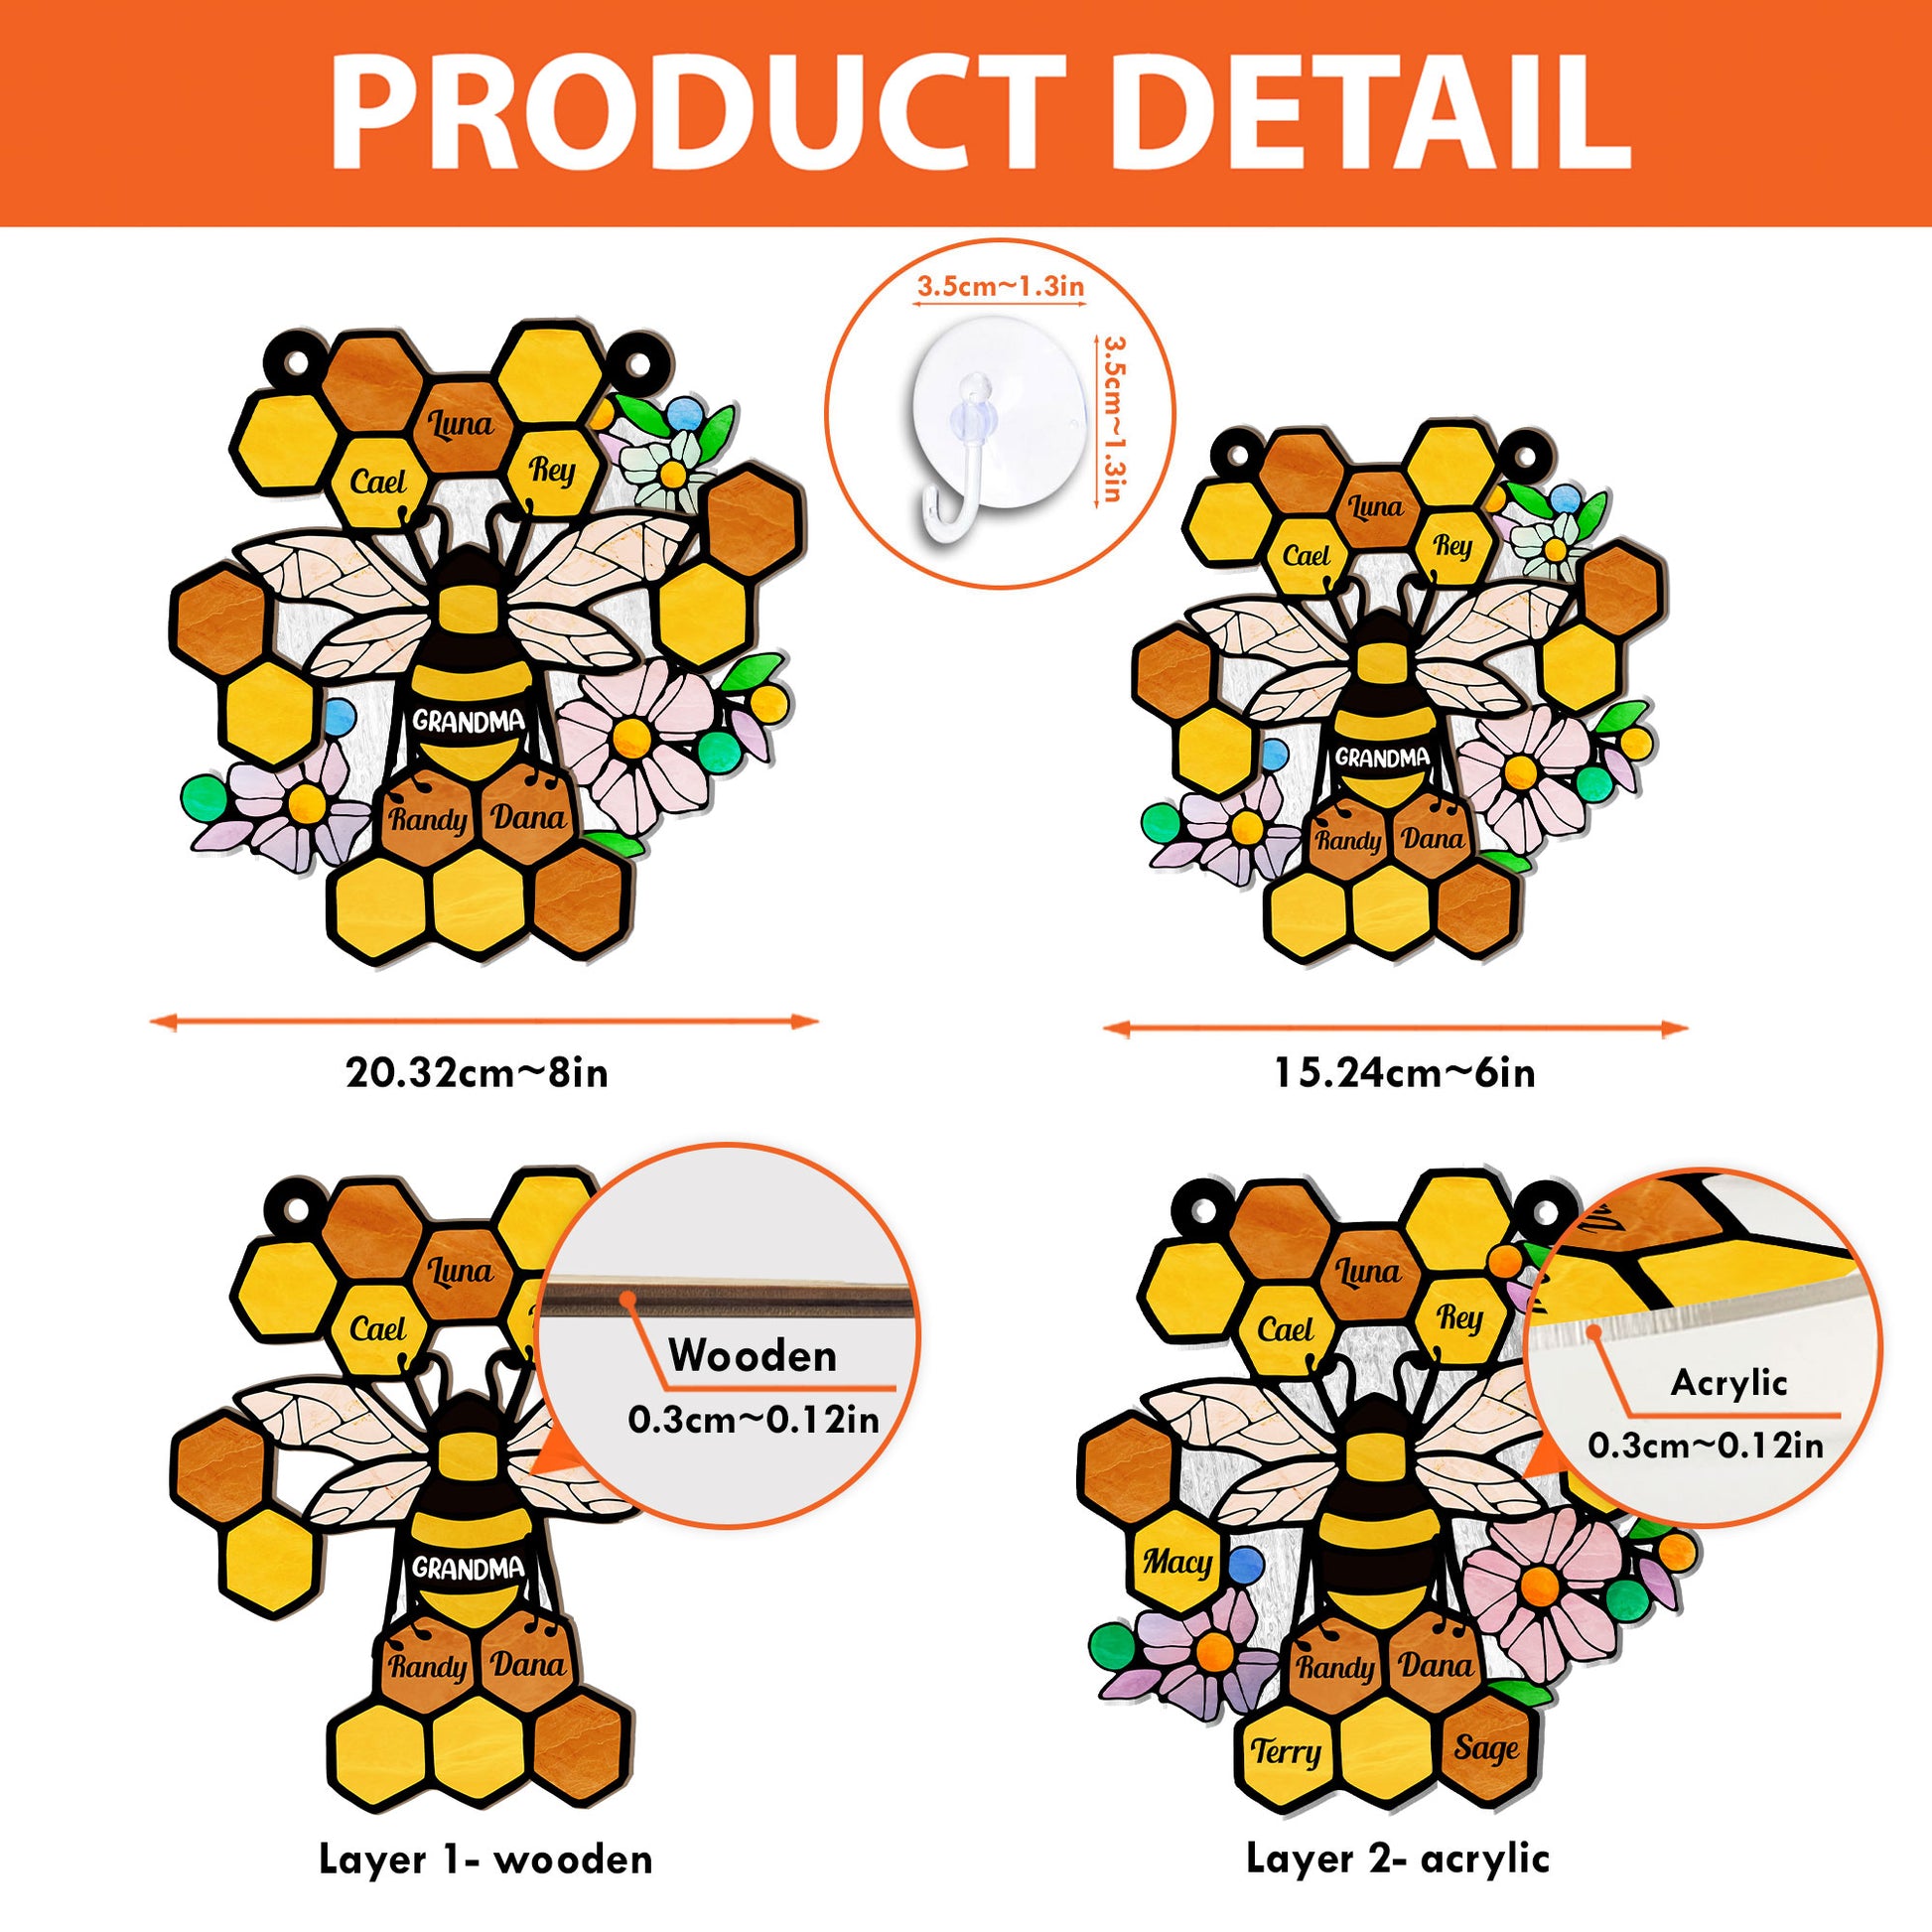 Honeycomb - Personalized Window Hanging Suncatcher Ornament